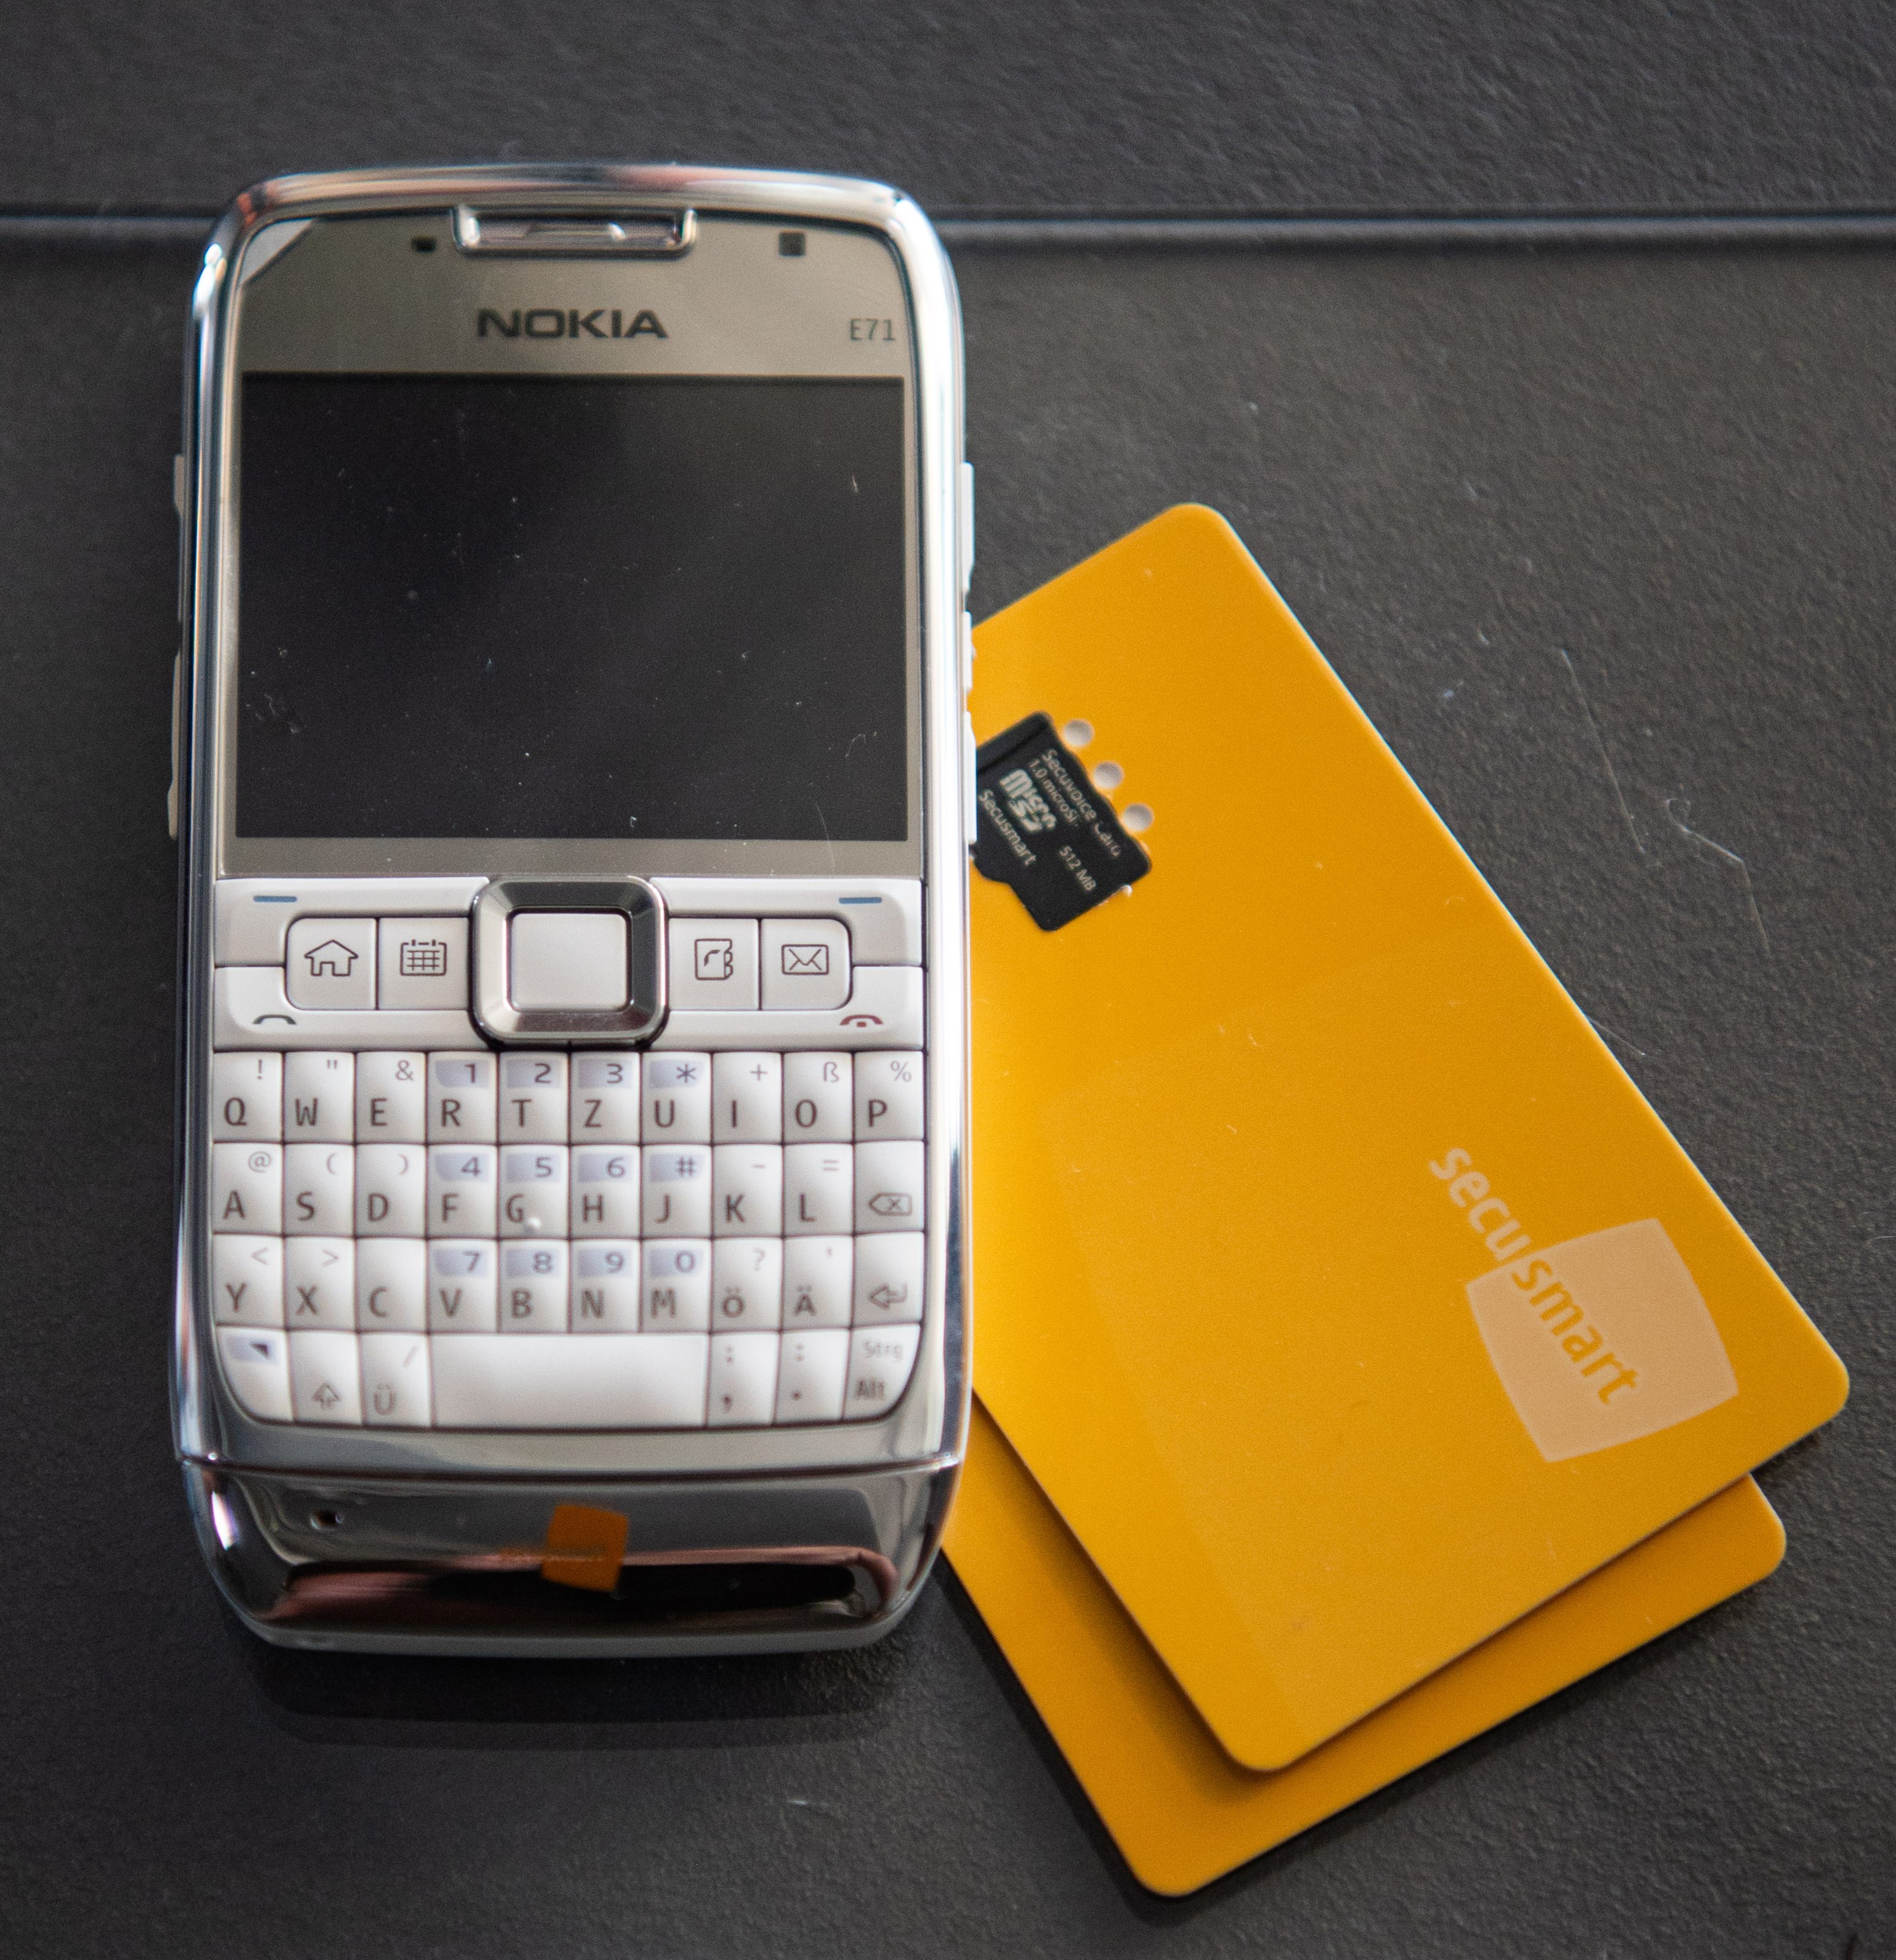 Nokia – E71 (mit Secusmart Security Card) (Heinz Nixdorf MuseumsForum CC BY-NC-SA)